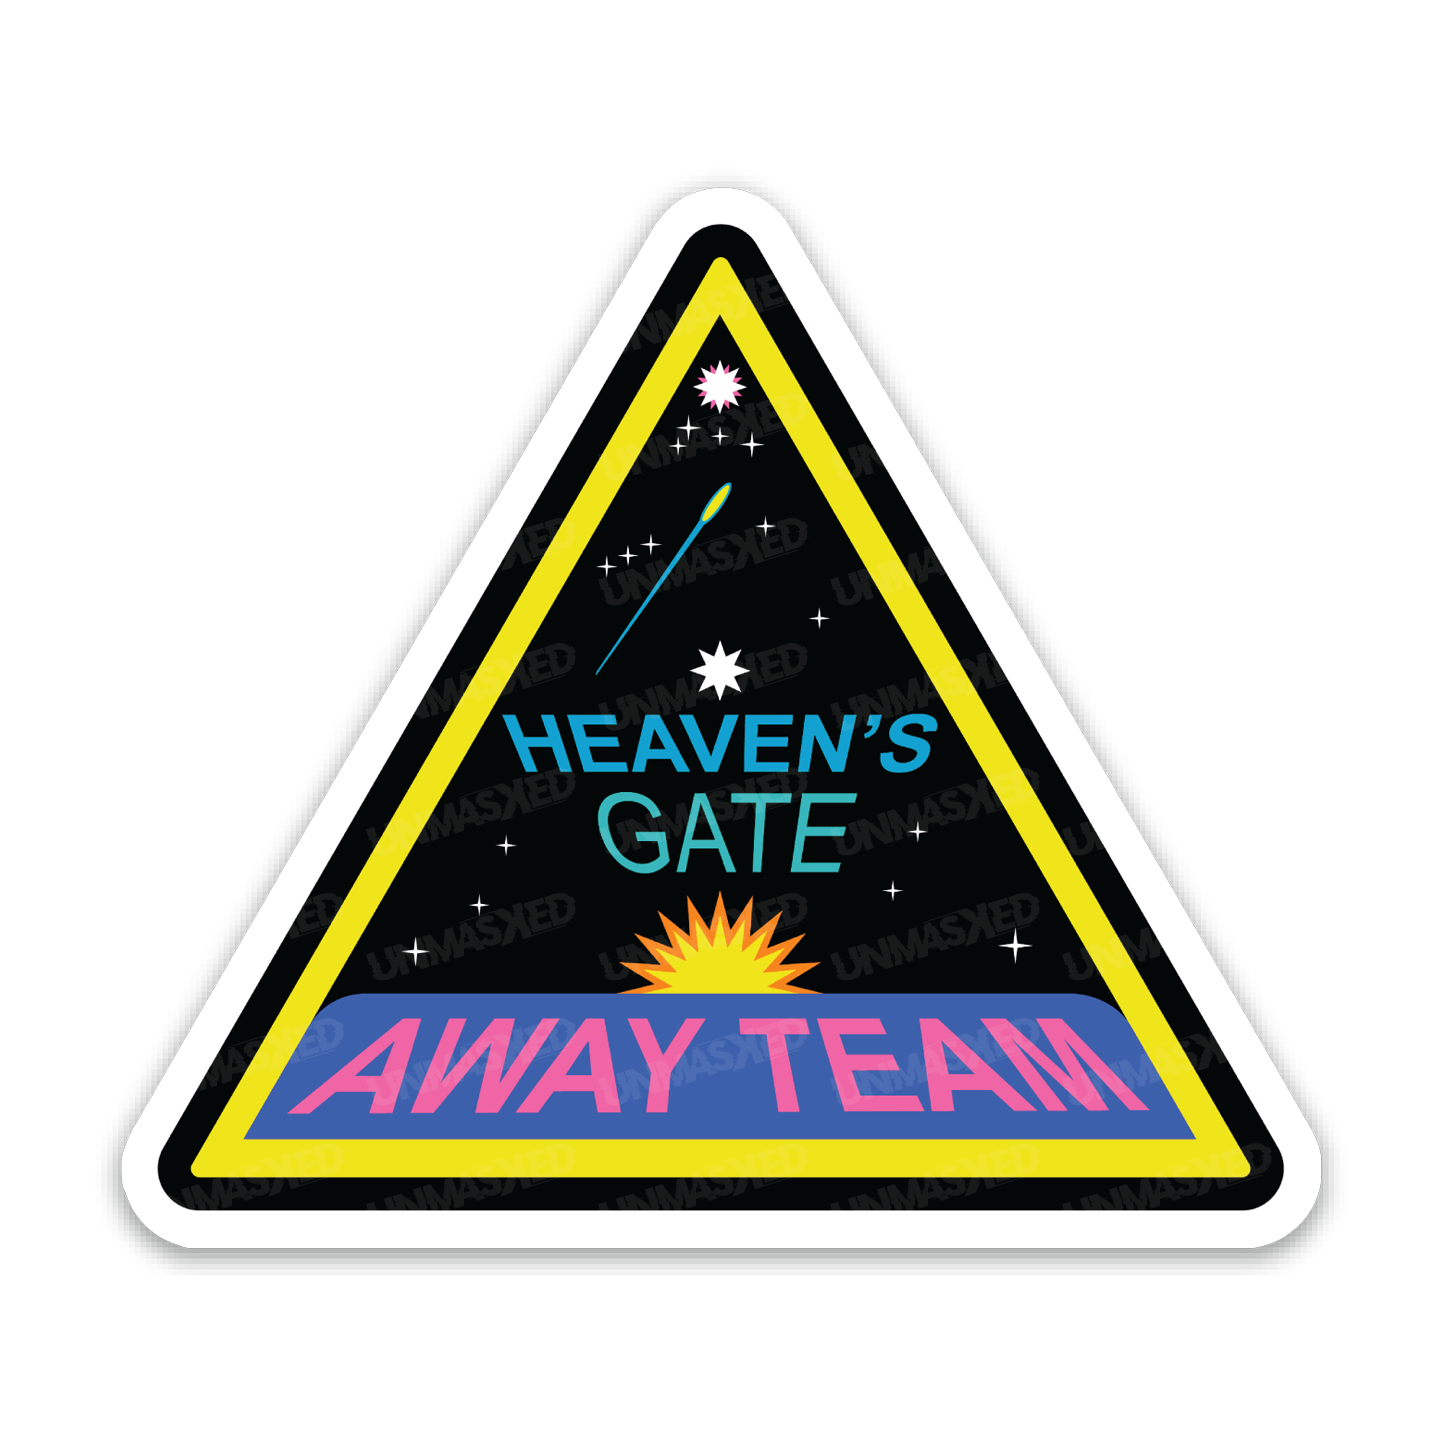 Heaven's Gate Away Team Sticker